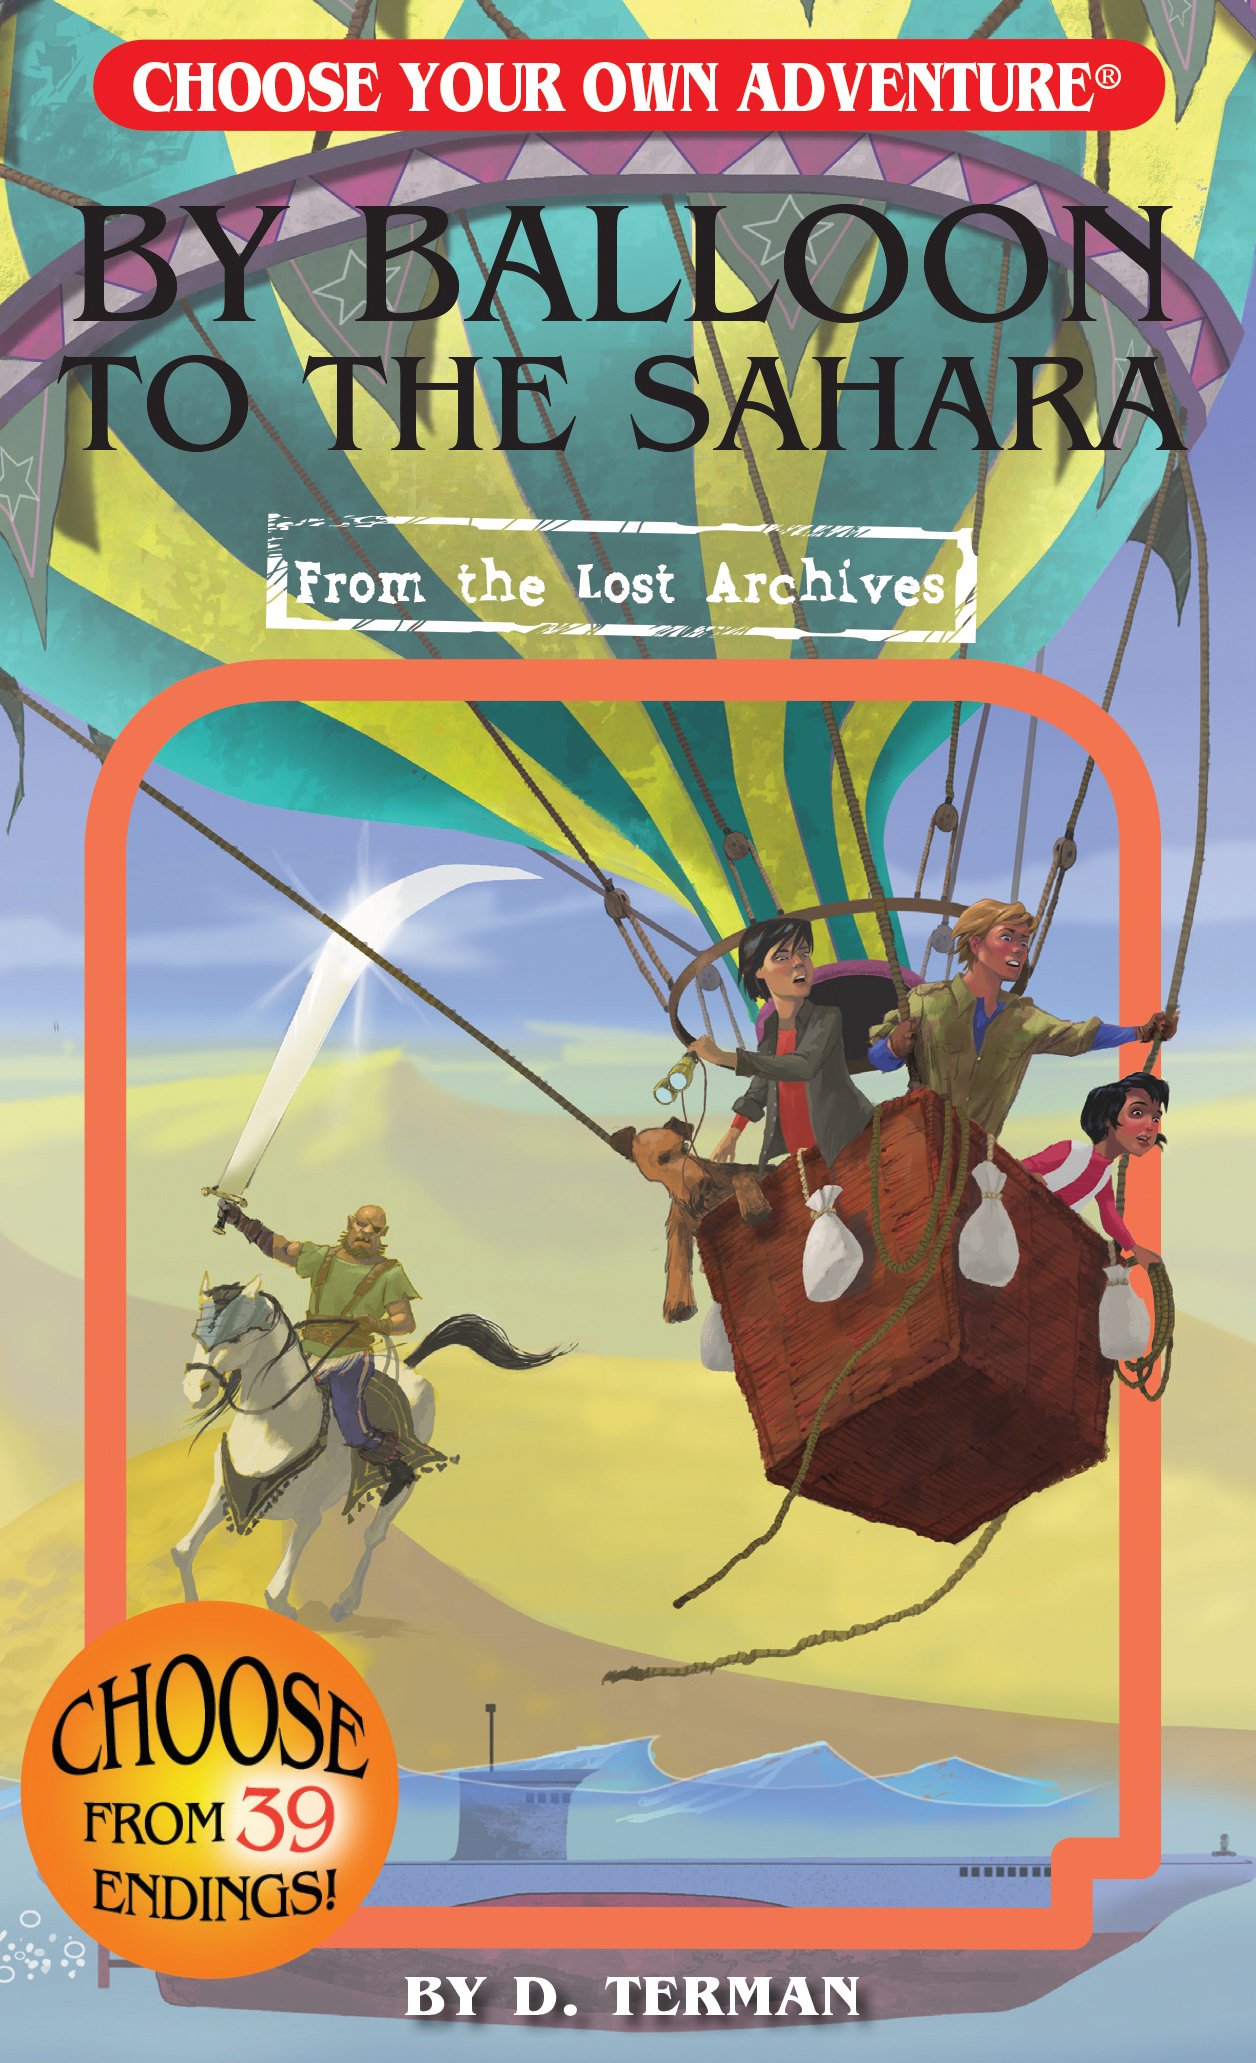 By Balloon to the Sahara CYOA